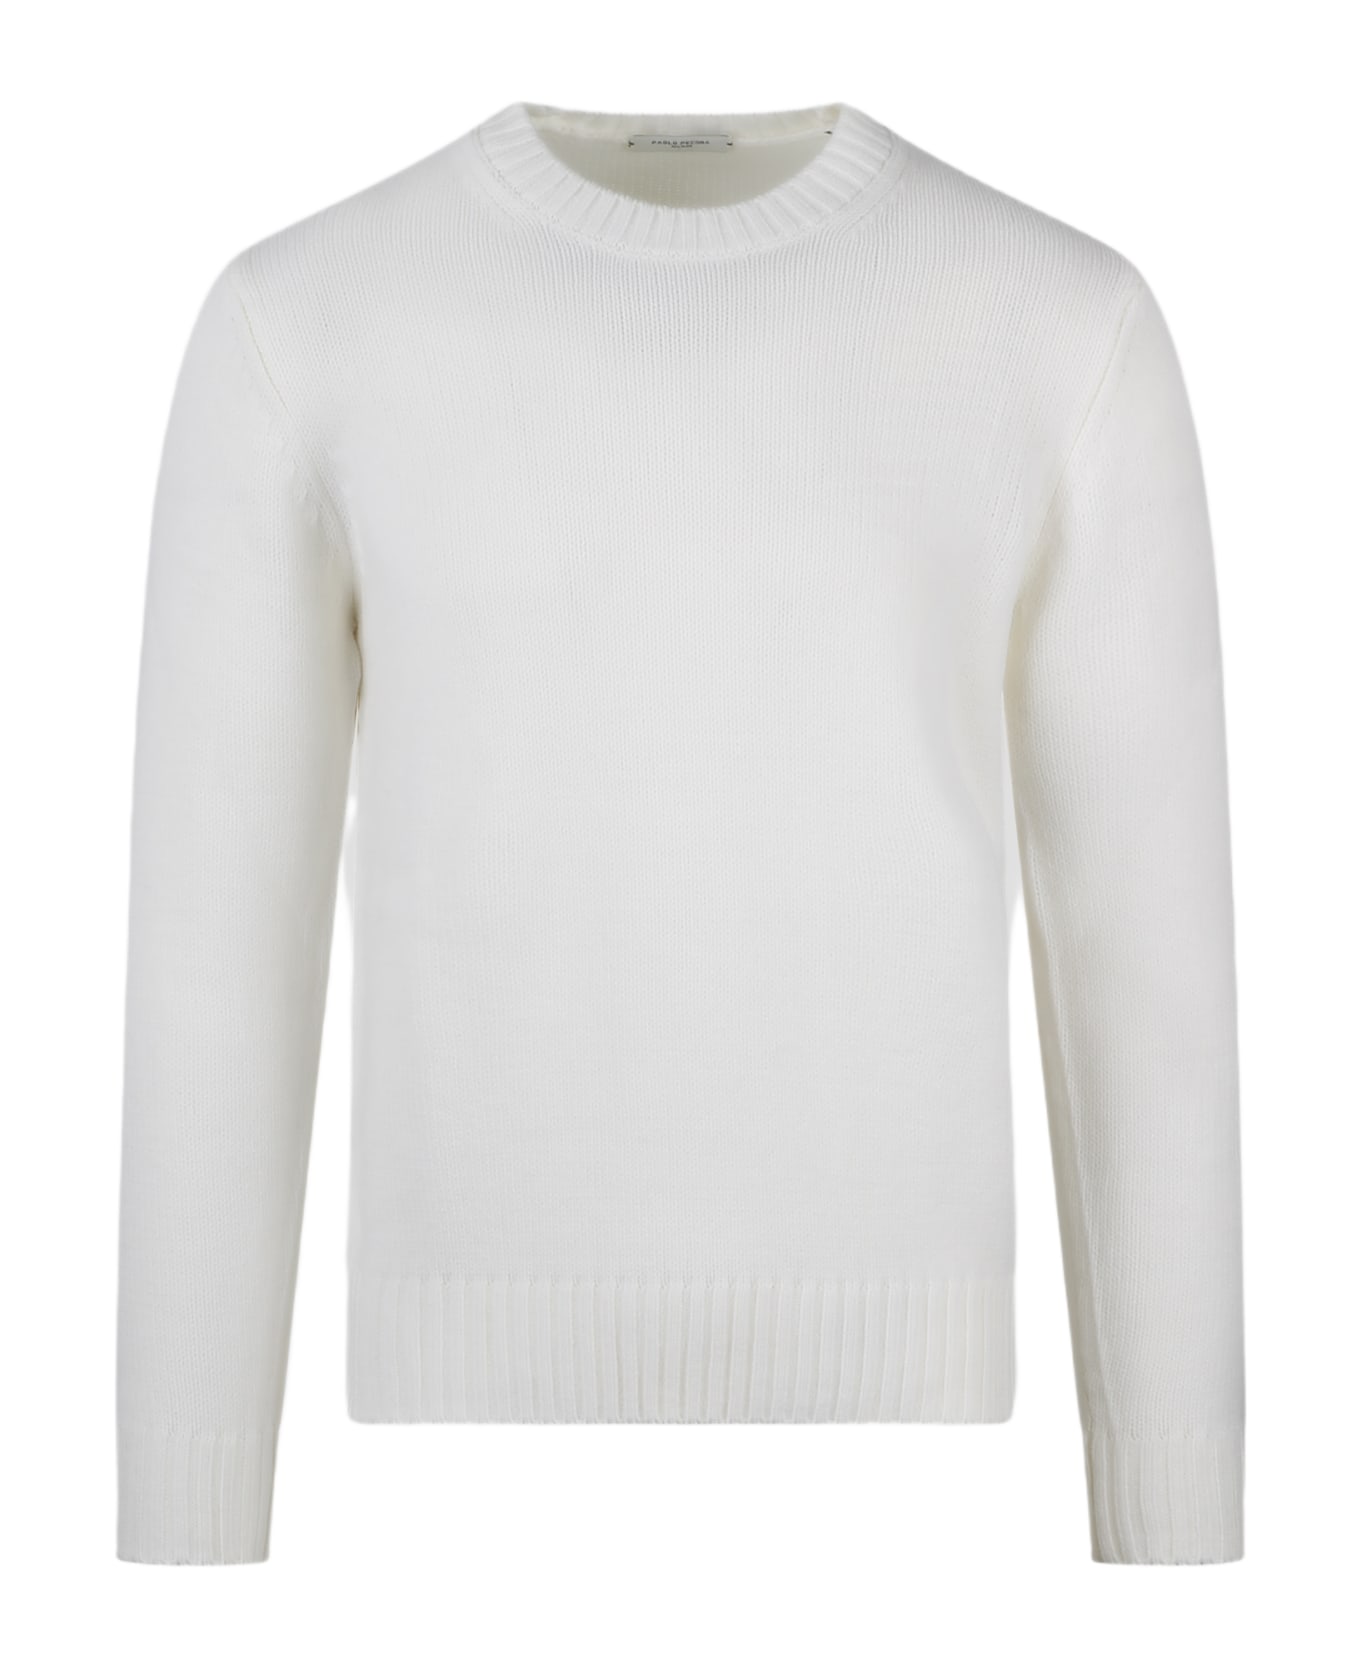 Paolo Pecora Crewneck Sweater - White ニットウェア